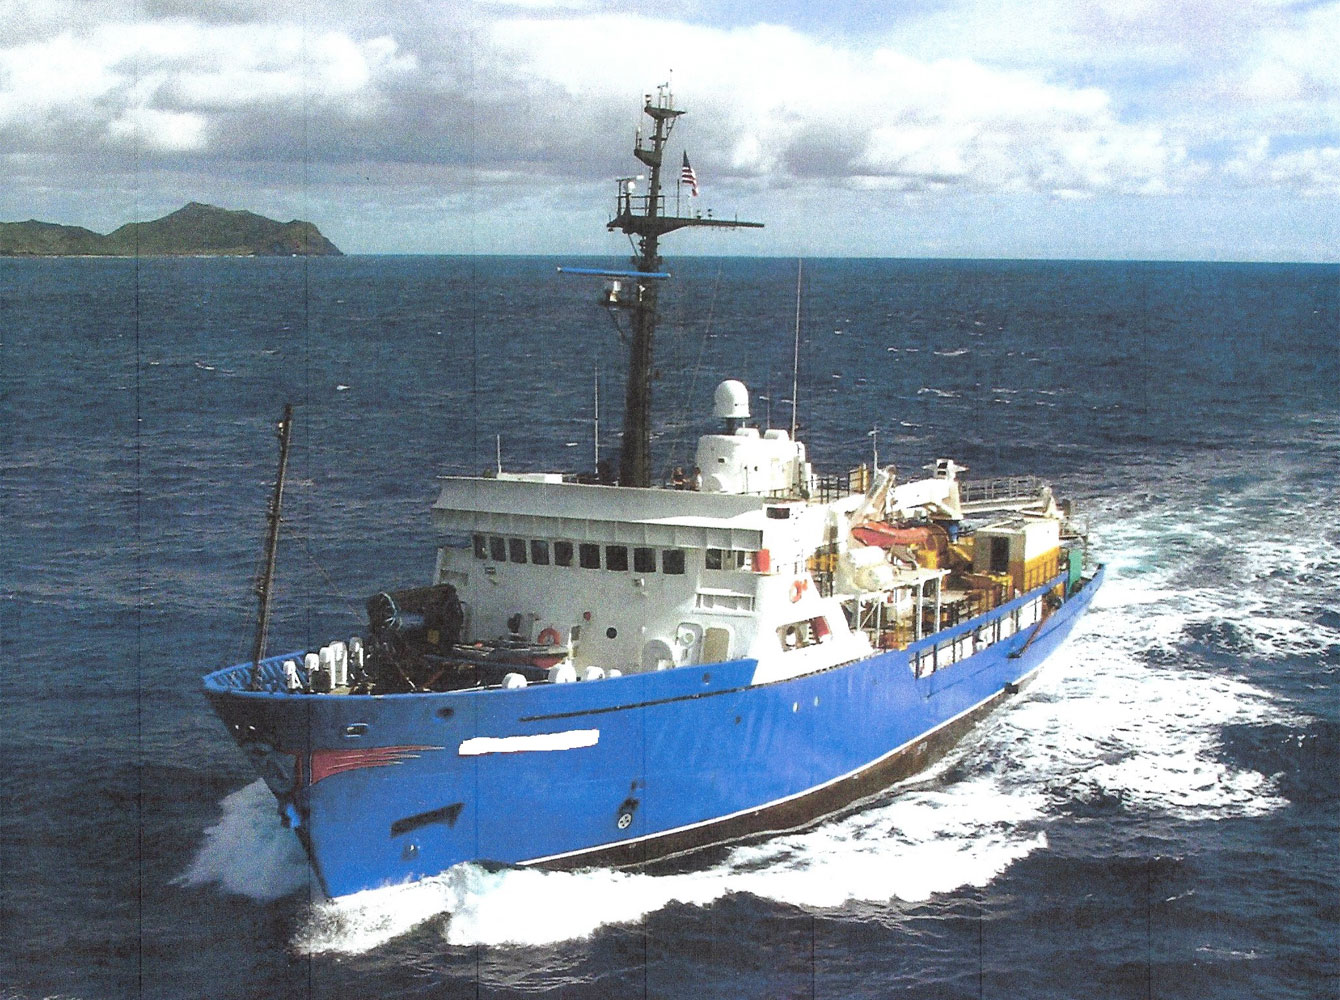 R-100: 231' Research Vessel